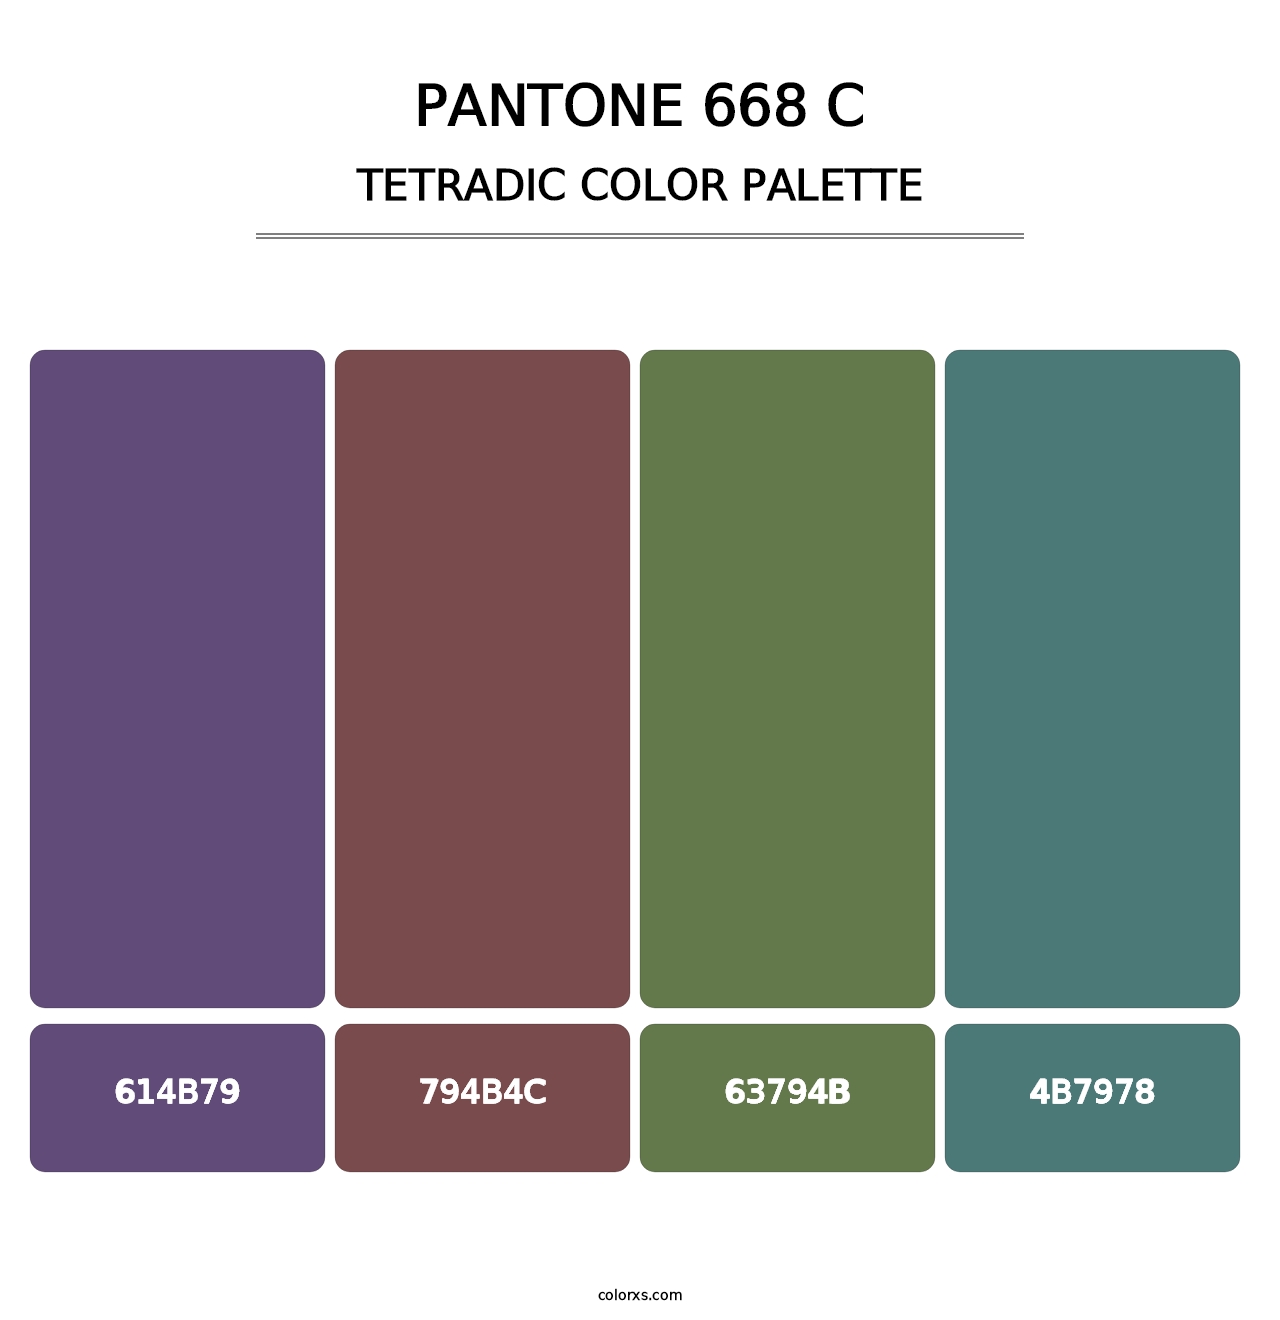 PANTONE 668 C - Tetradic Color Palette